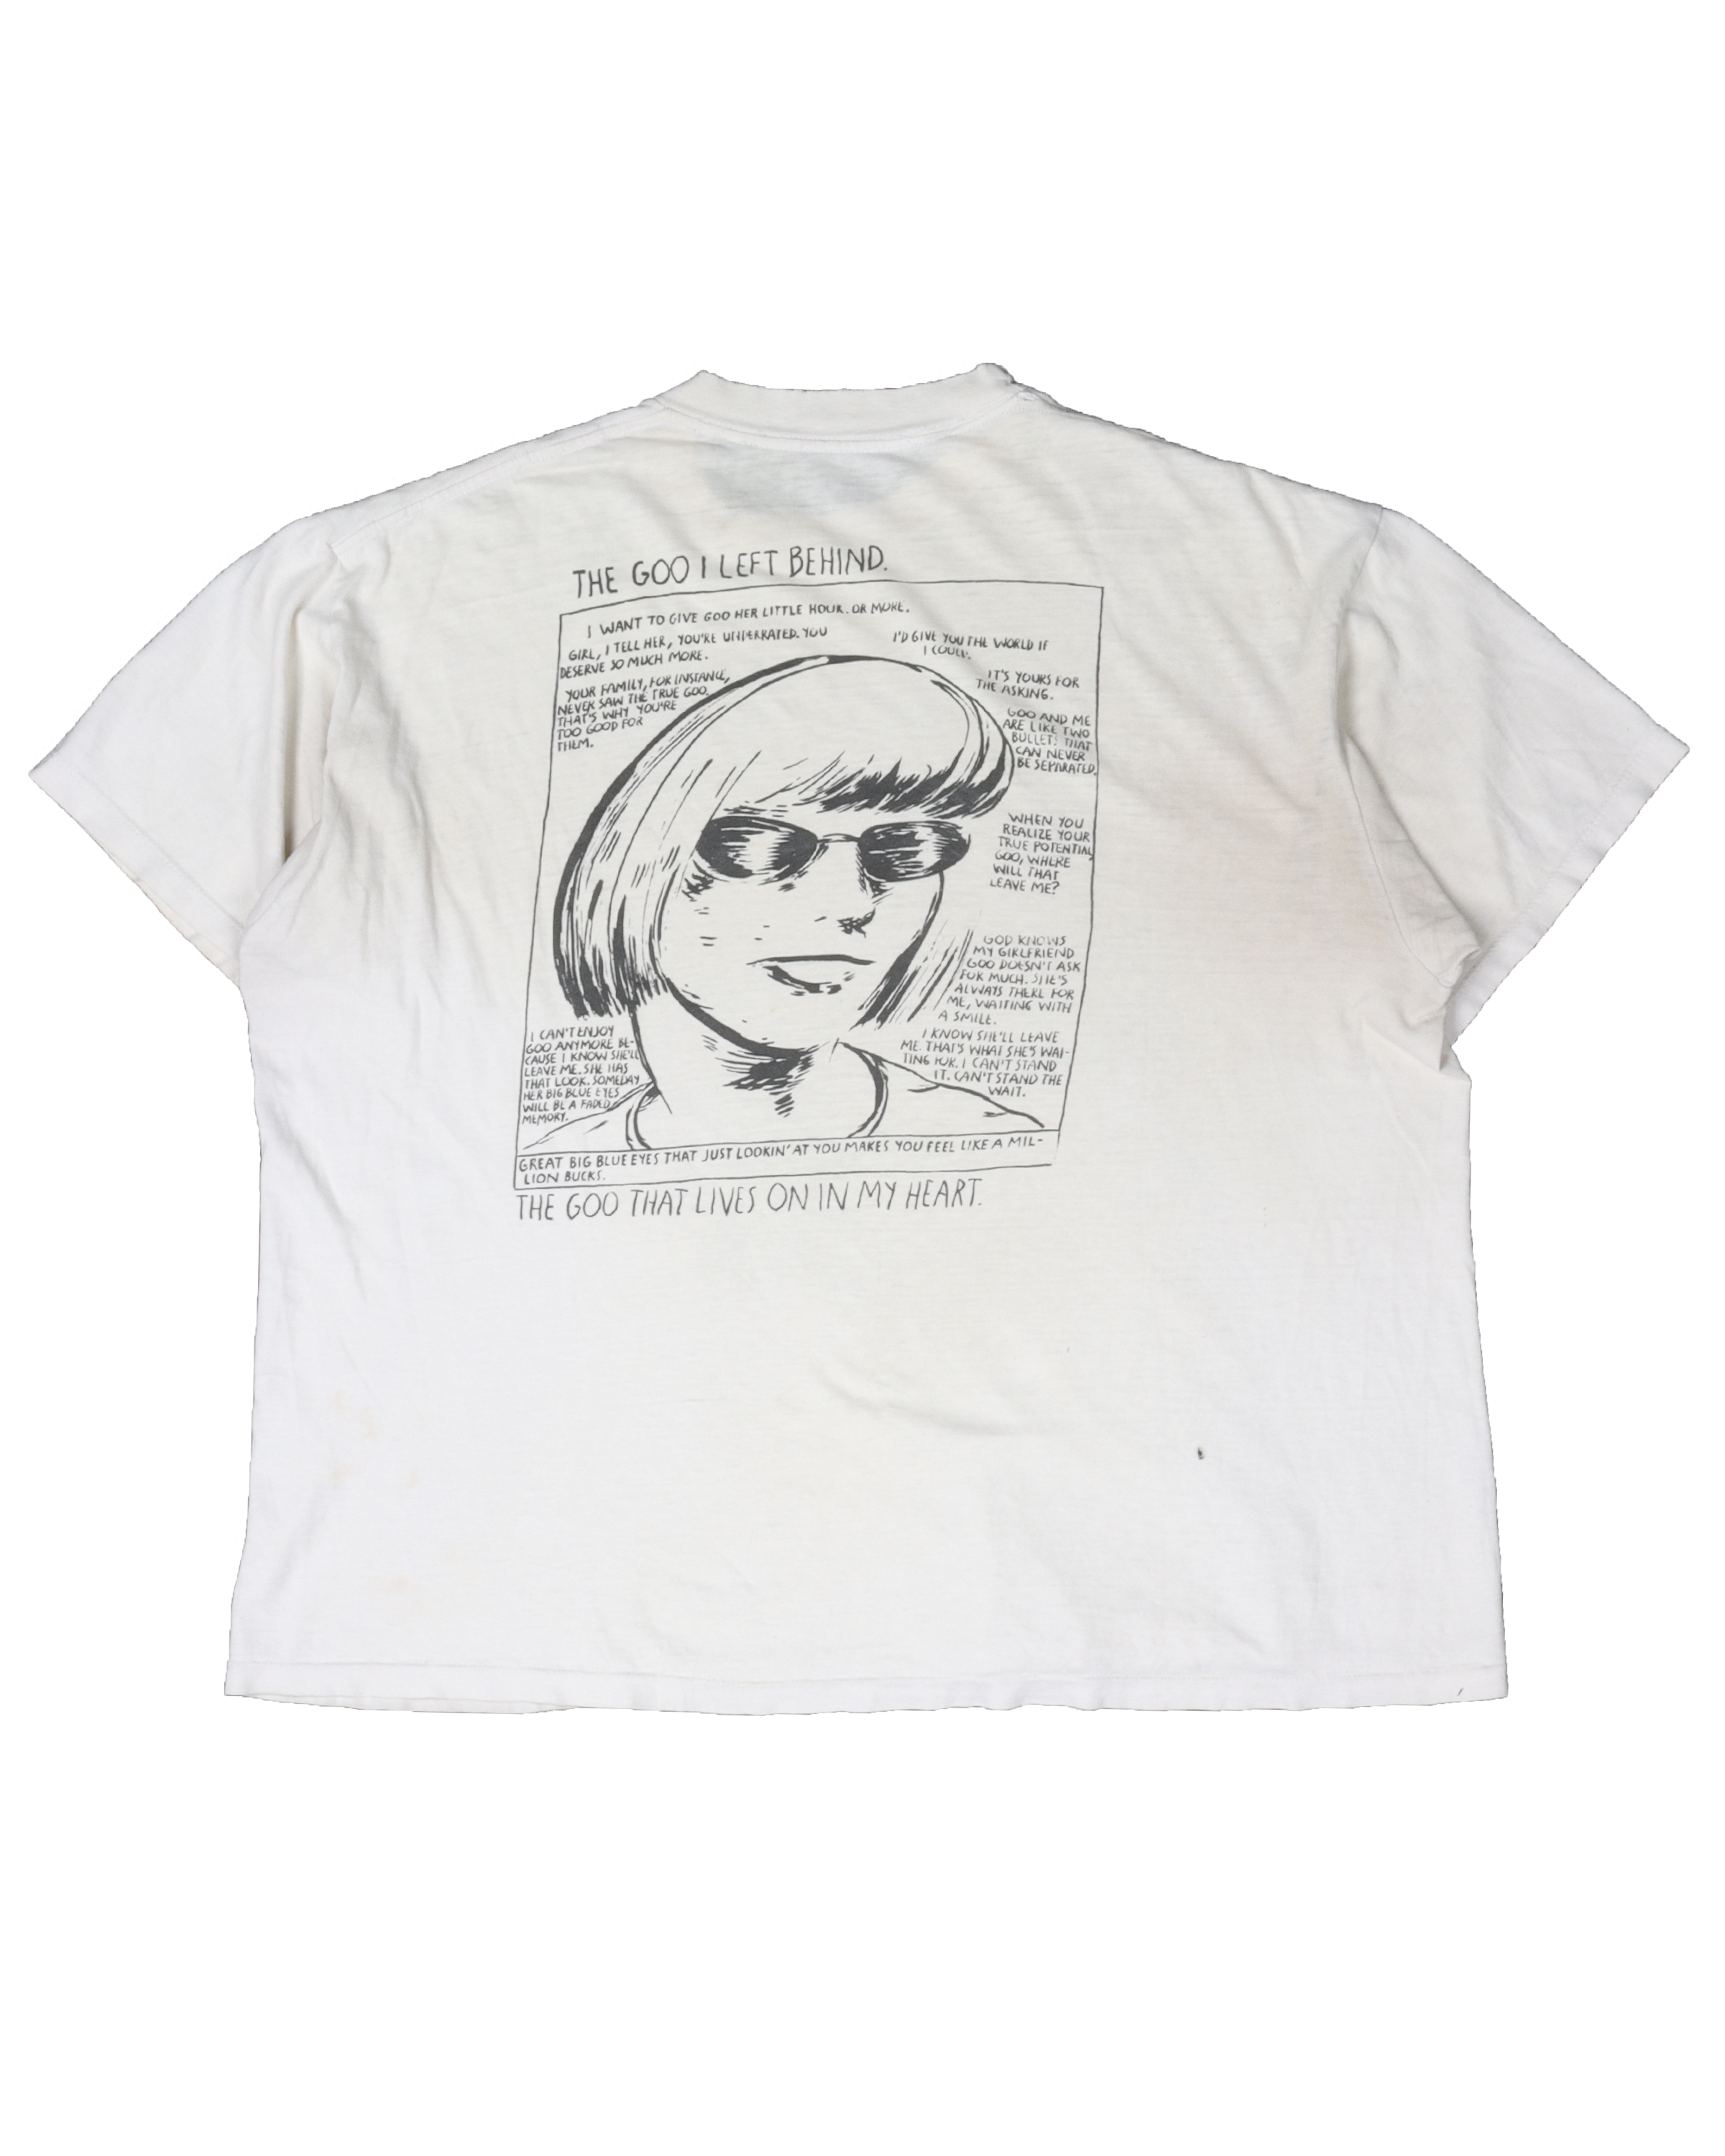 Sonic Youth 1991 "In GOO" T-Shirt by Raymond Pettibon (Euro Verison)